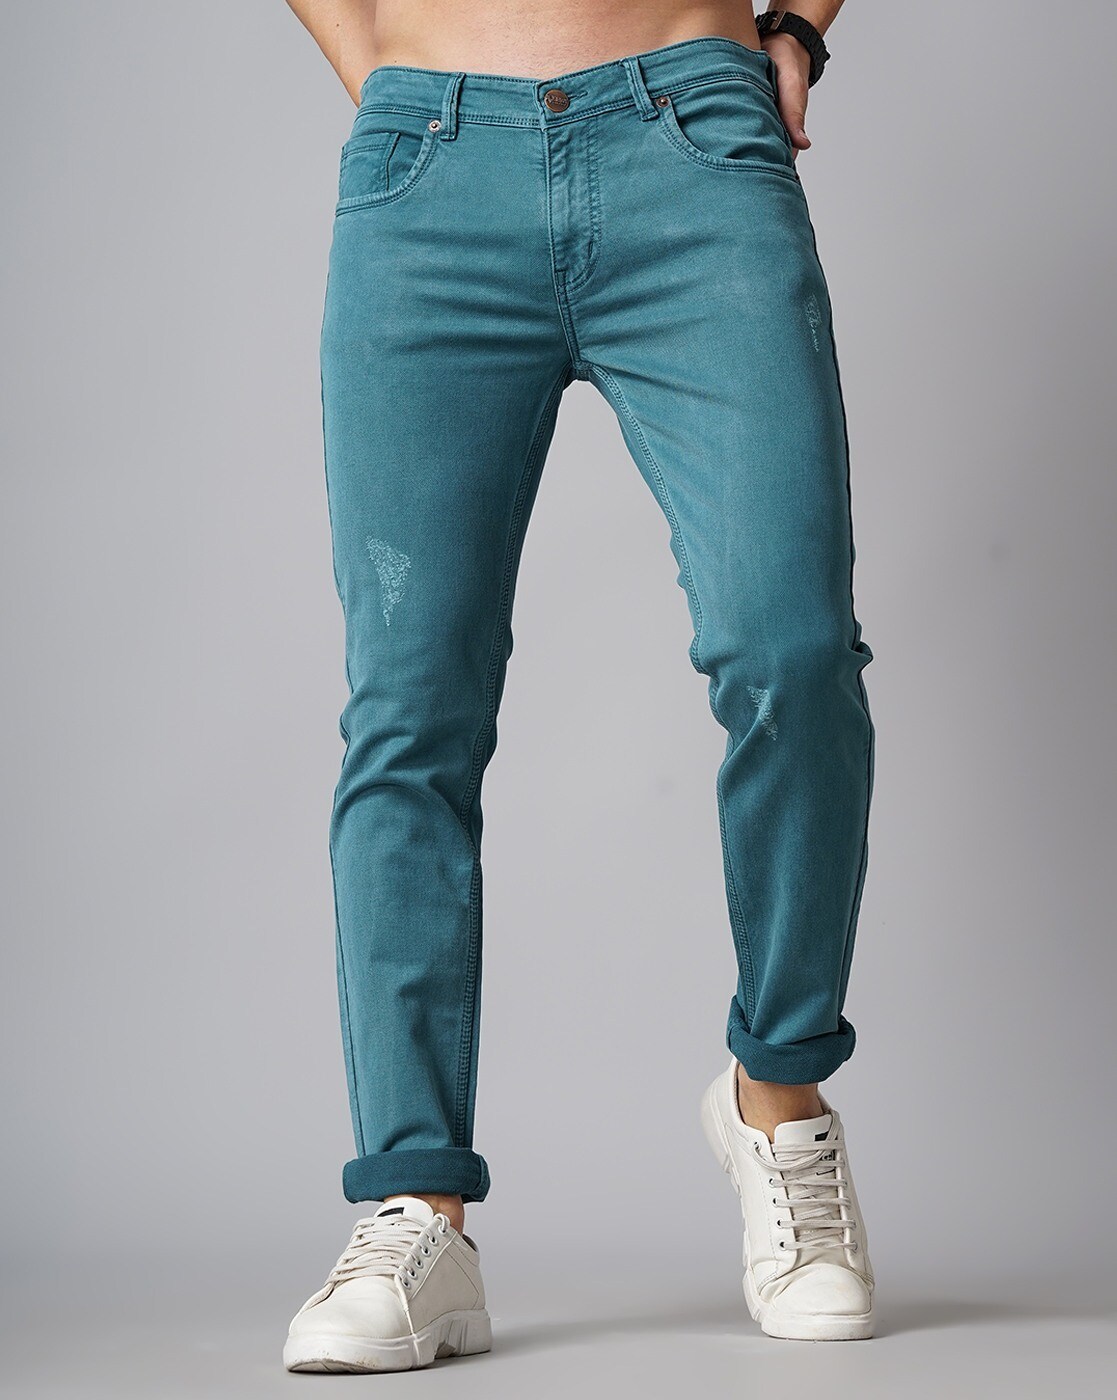 kop Baffle enkel en alleen Buy Turquoise Green Jeans for Men by Owen Hart Online | Ajio.com